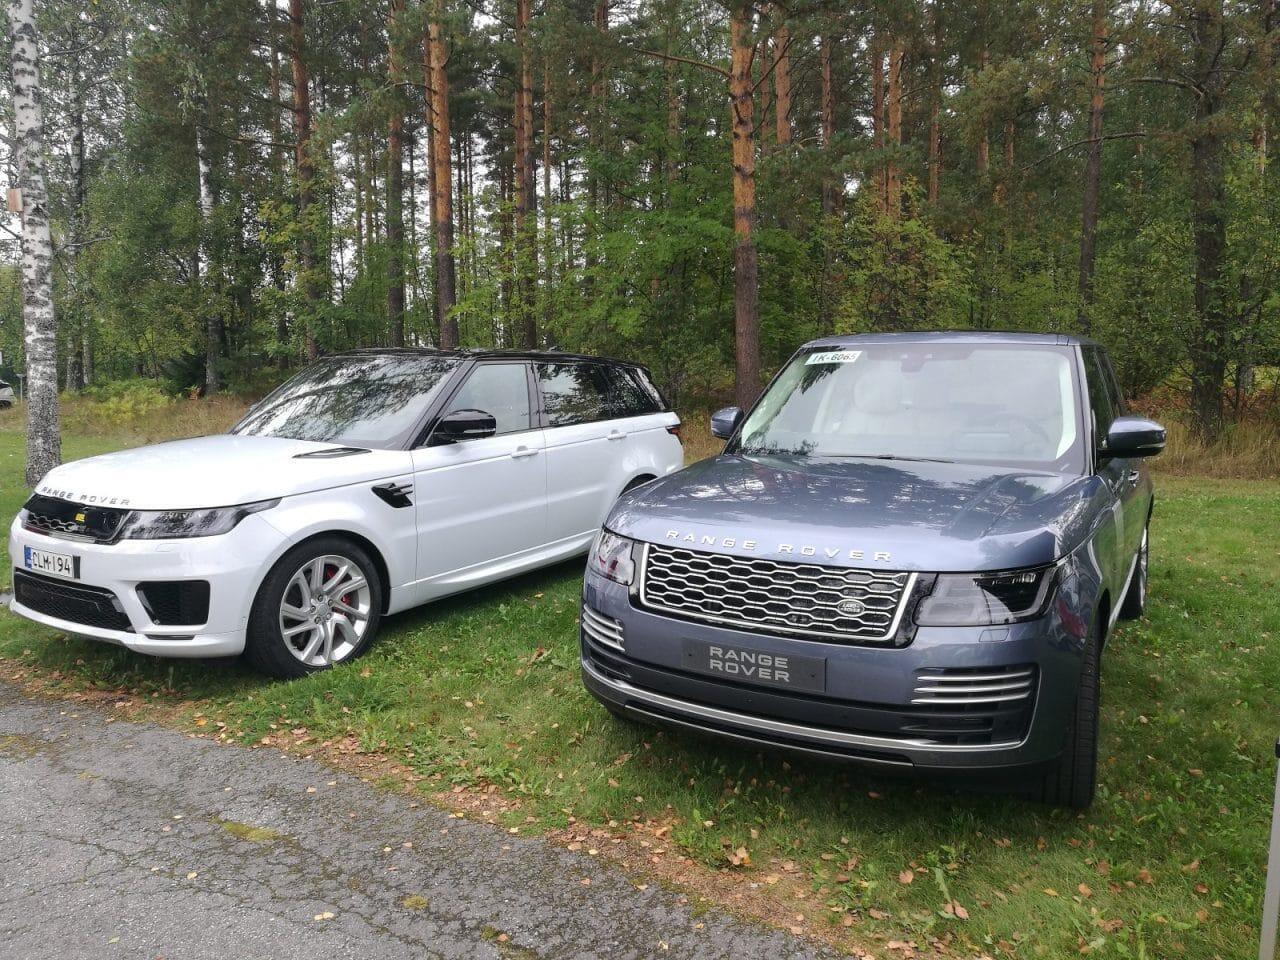 Jokamies-Tesla-Club-Finland-Långvik-Range-Rover-hybrid